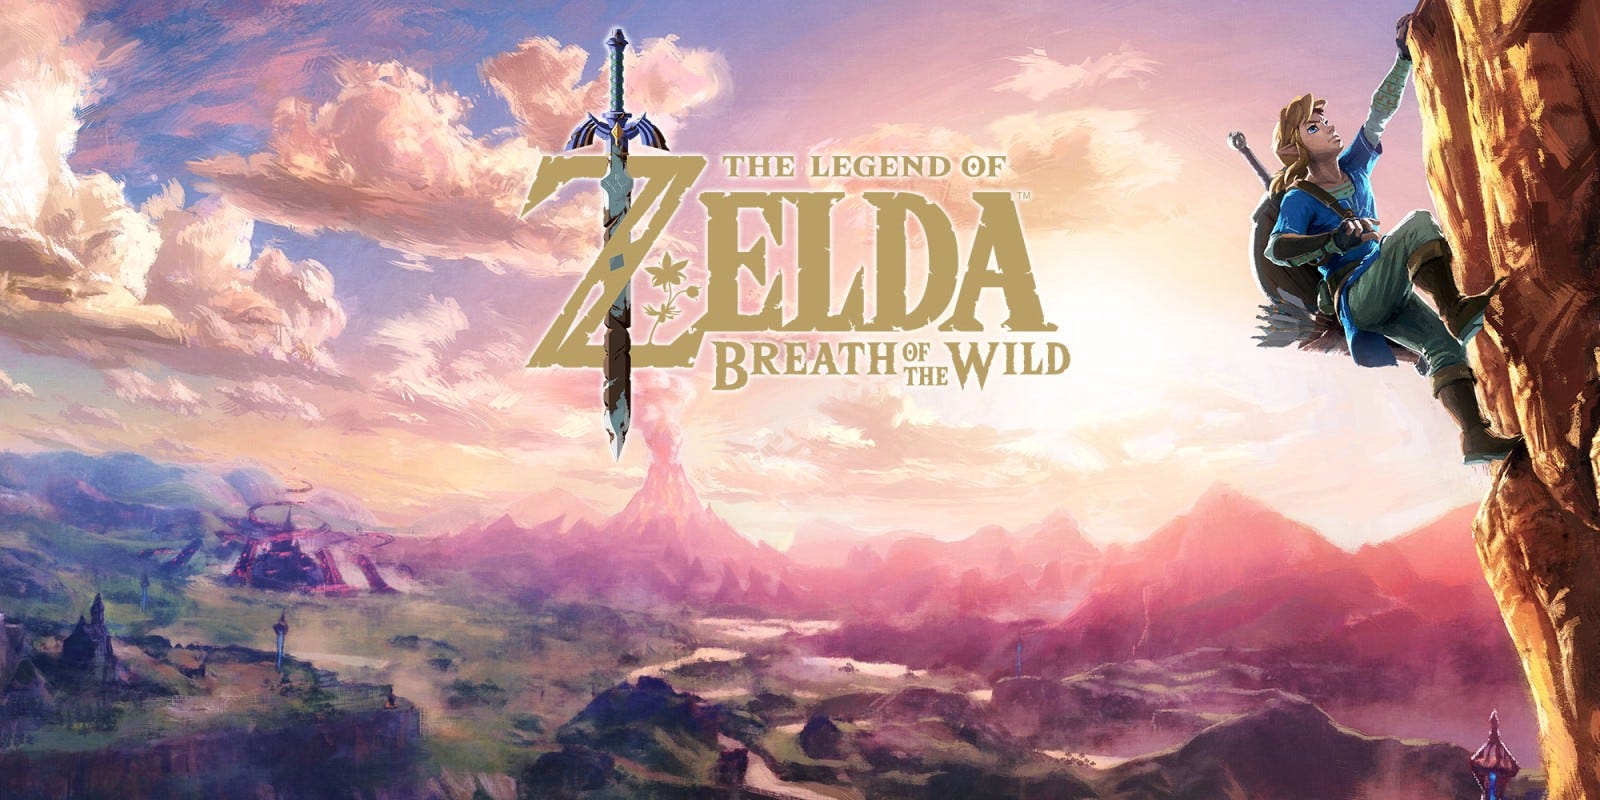 [The Legend of Zelda: Breath of the Wild](https://www.nintendo.com/games/detail/the-legend-of-zelda-breath-of-the-wild-switch/)